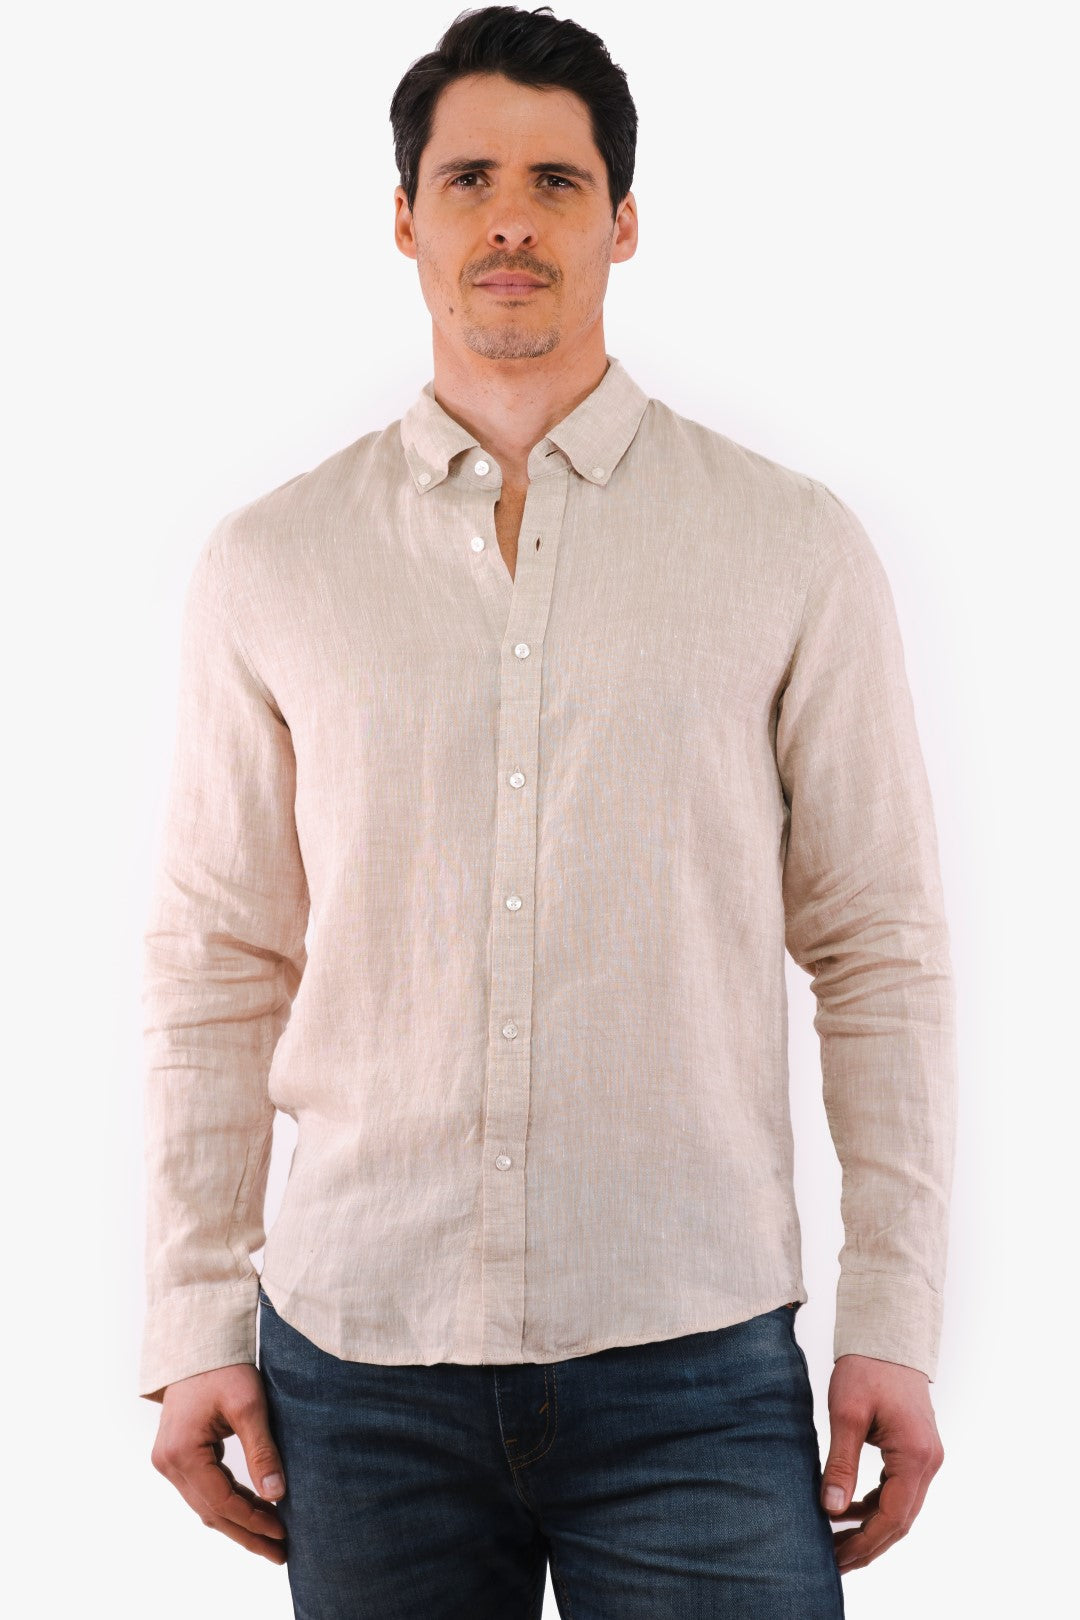 Michael Kors Long Sleeve Linen Shirt in Beige color